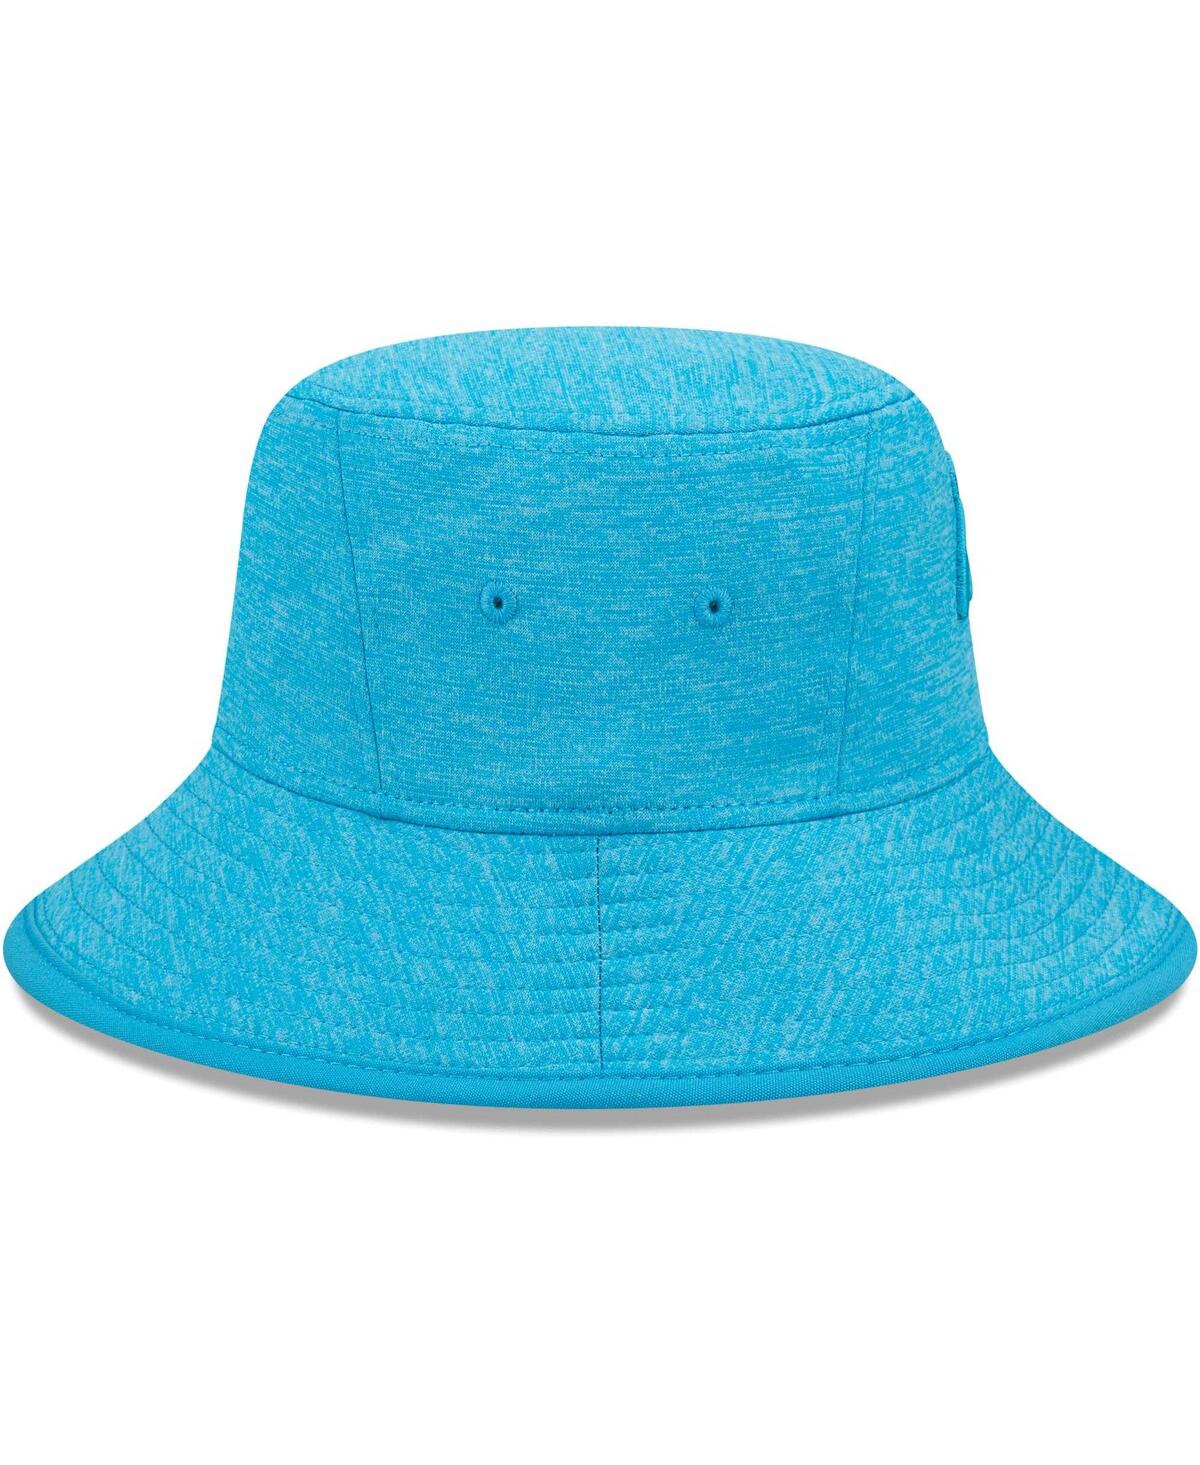 Shop New Era Men's  Heather Blue Carolina Panthers Bucket Hat